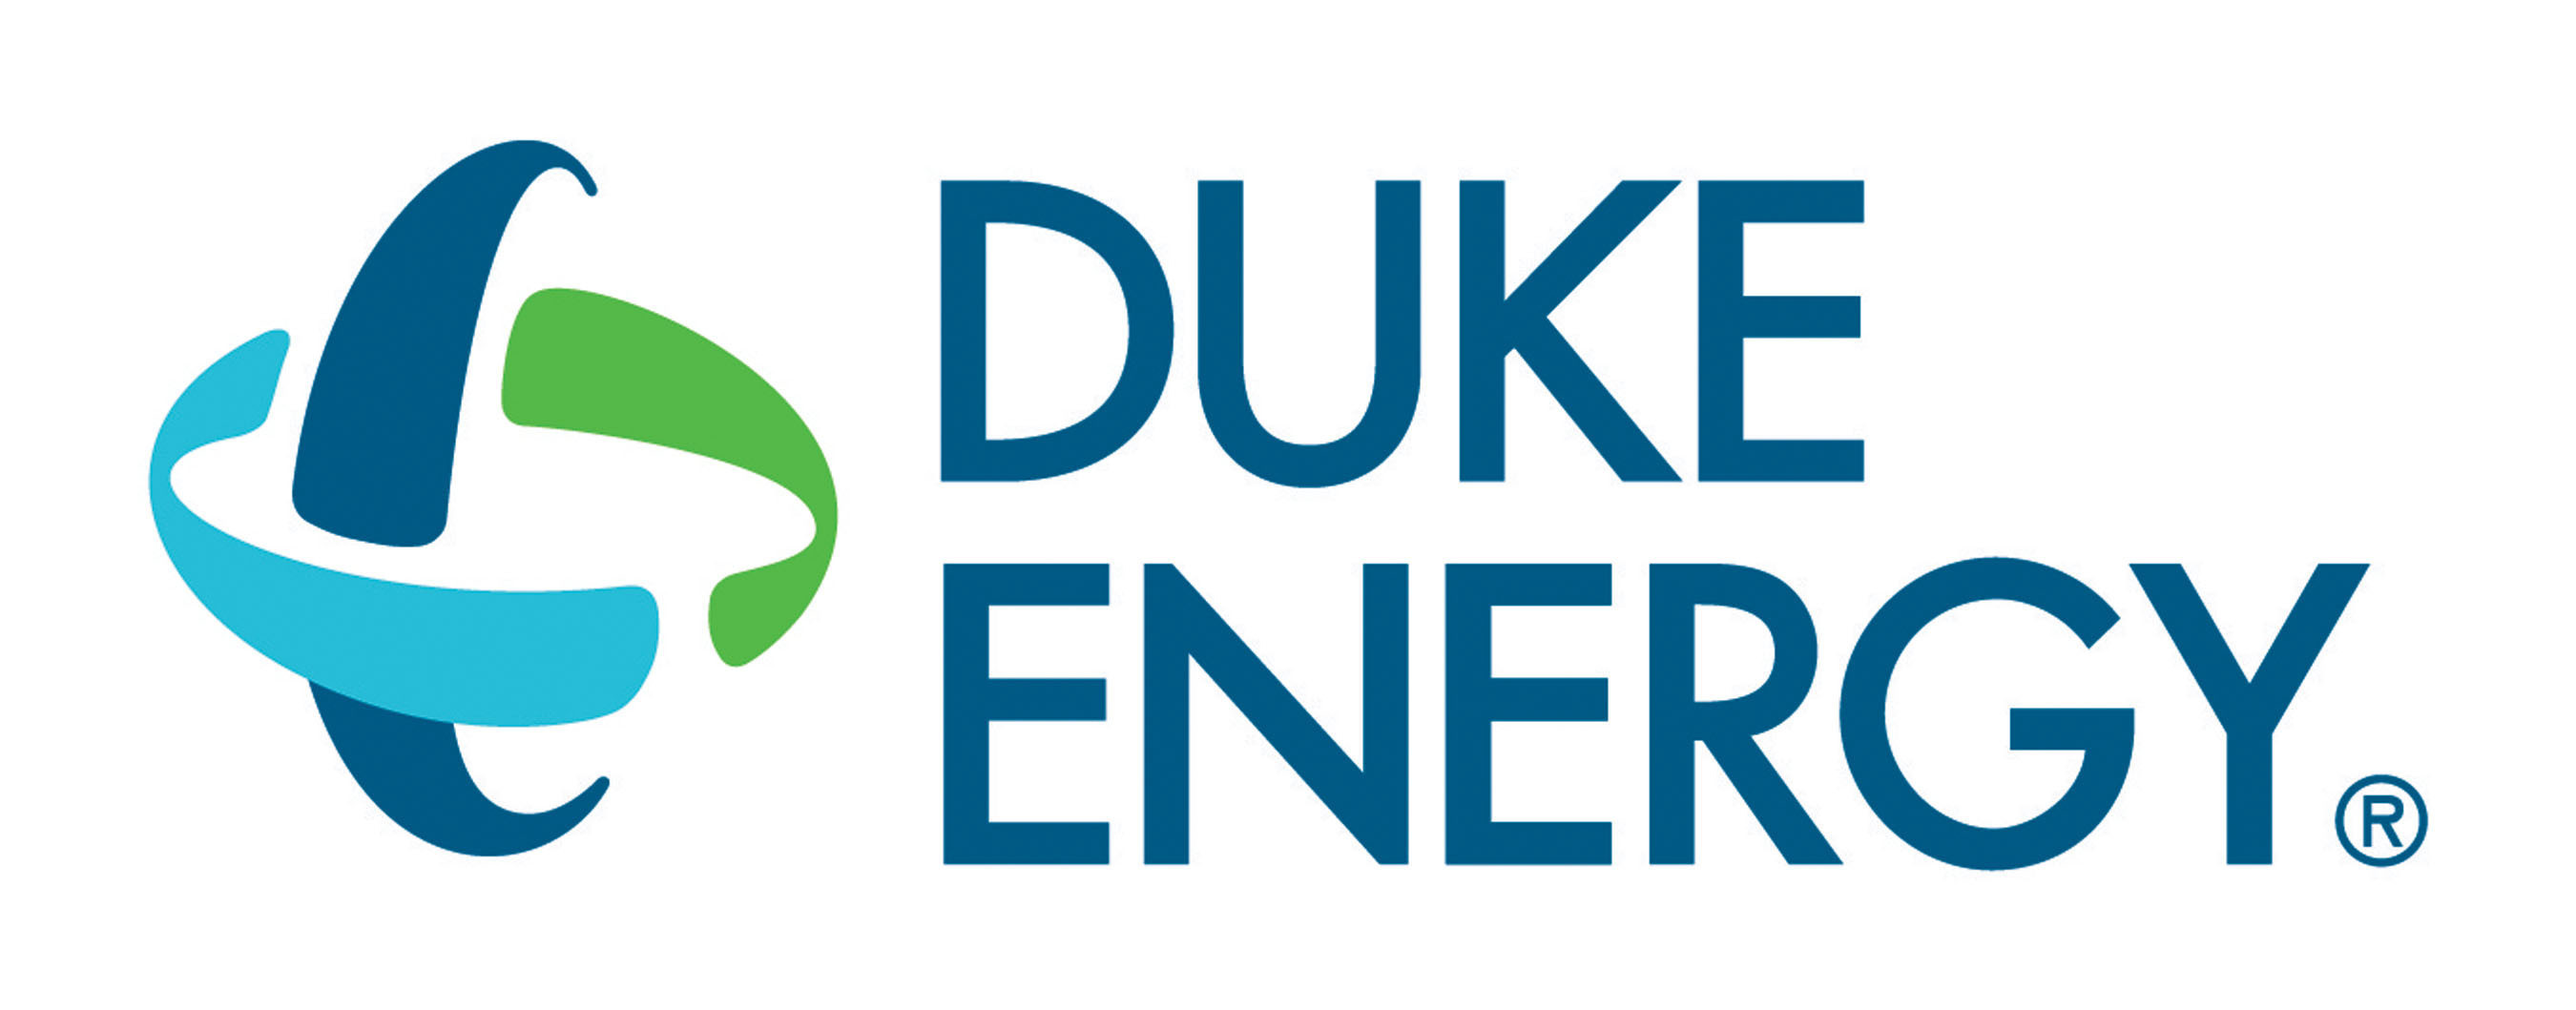 New Duke Energy logo. (PRNewsFoto/Duke Energy) (PRNewsFoto/)